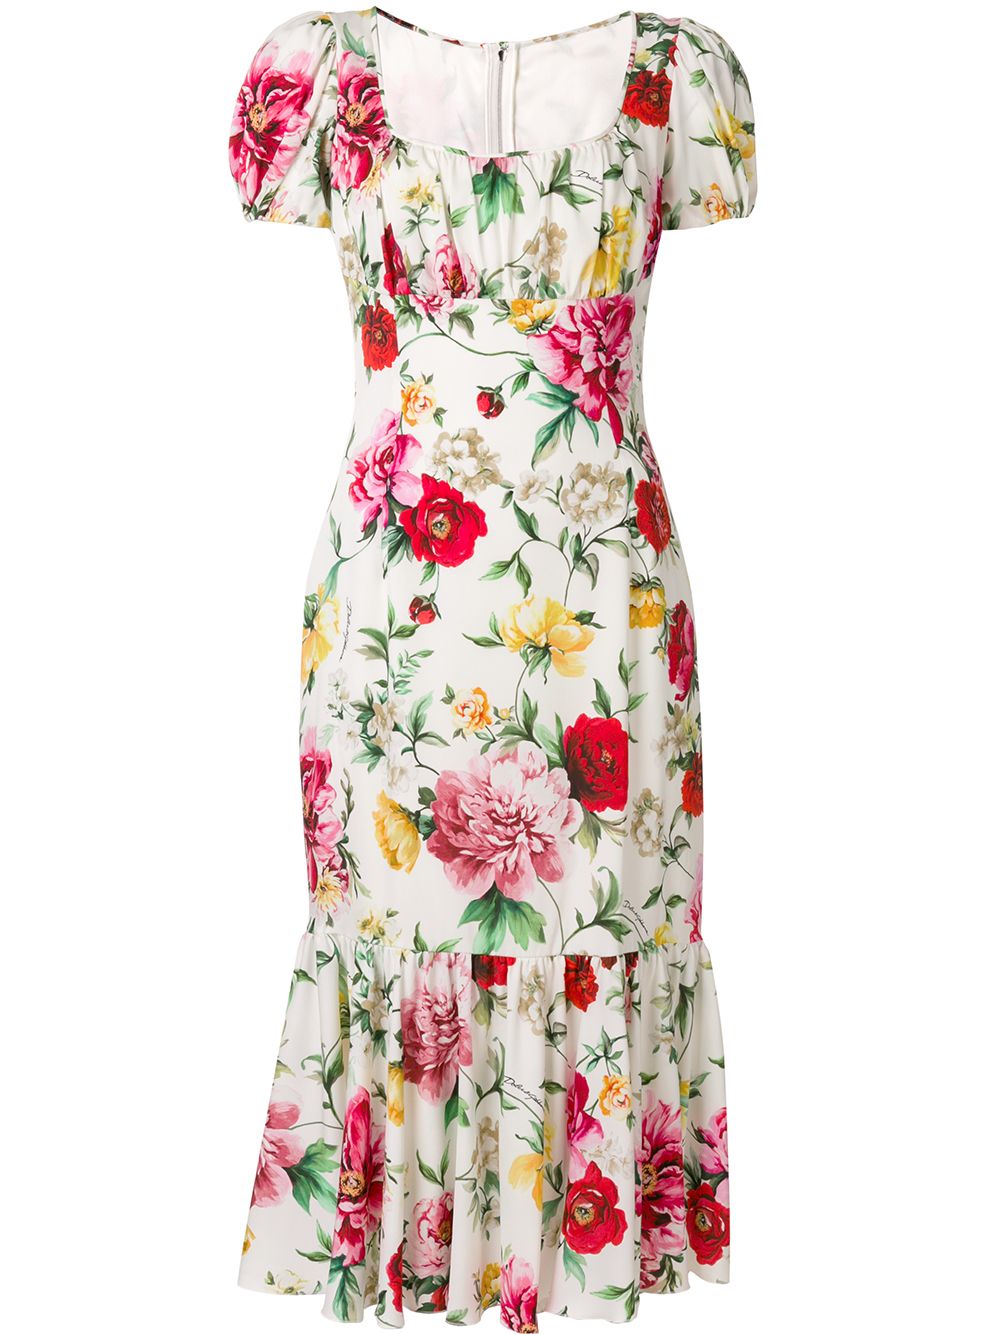 Dolce & Gabbana floral print midi dress $1,897 - Buy Online - Mobile ...